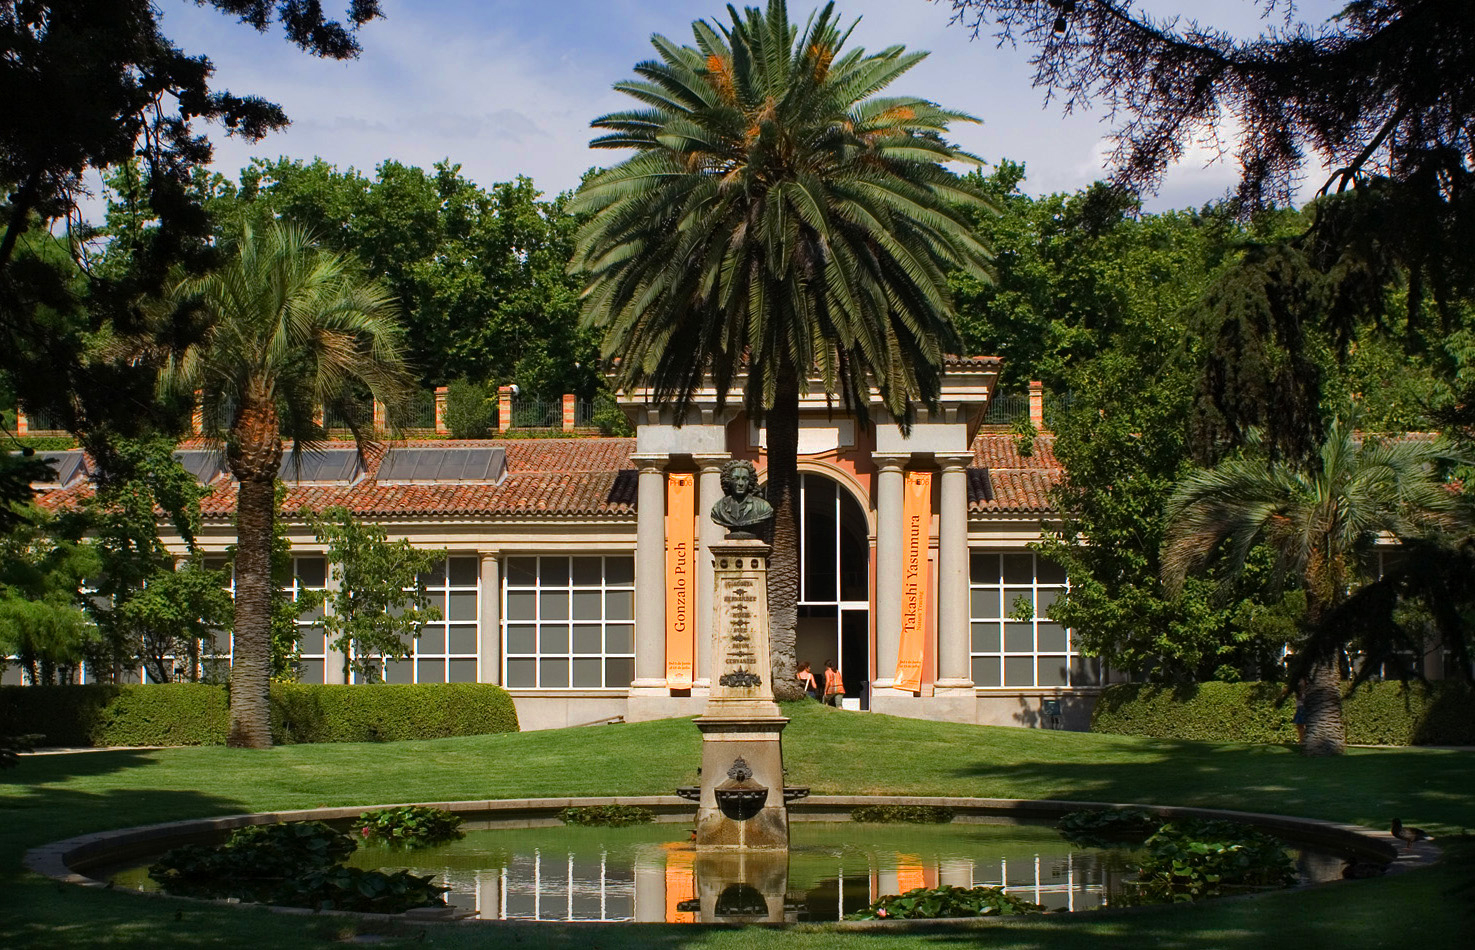 Madrid Botanical Garden (Real Jardin Botanico) dedans Jardin Botanico Madrid Precio